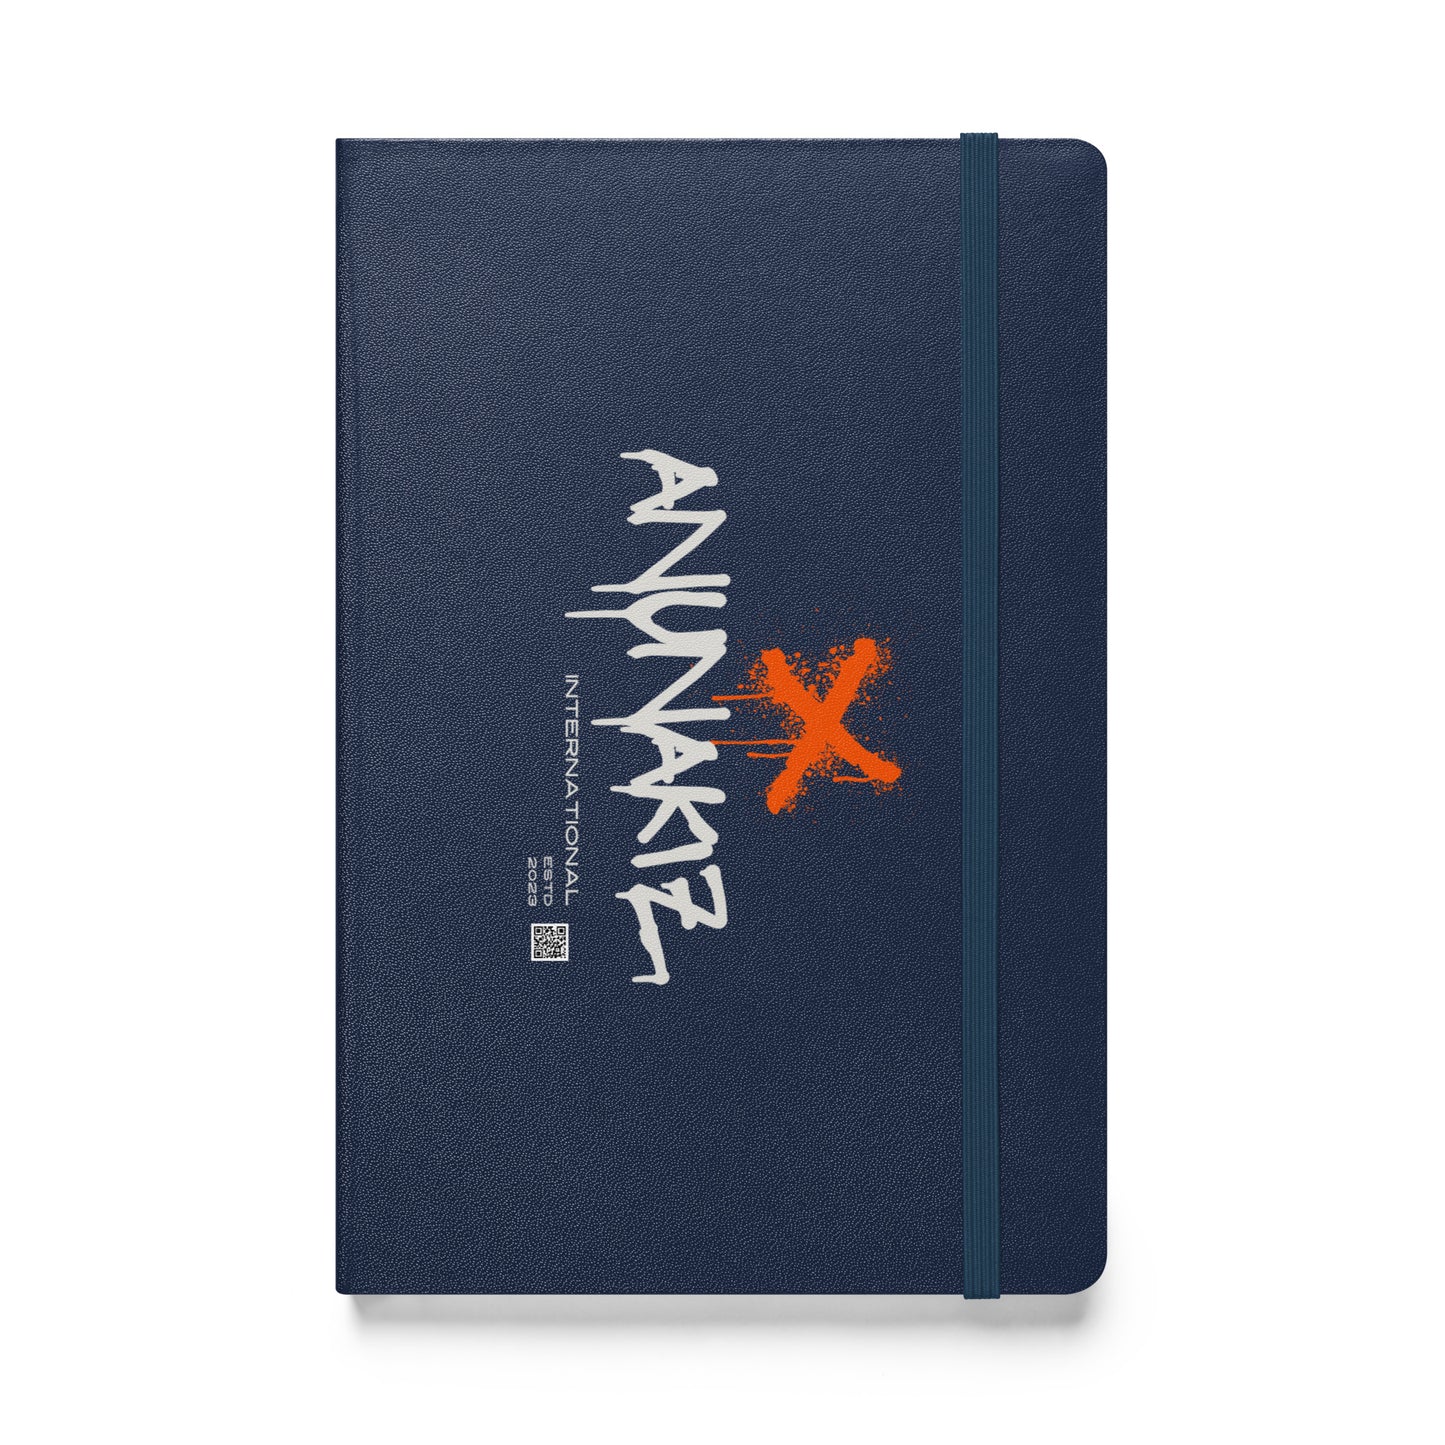 Anunakiz Graffiti Hardcover bound notebook